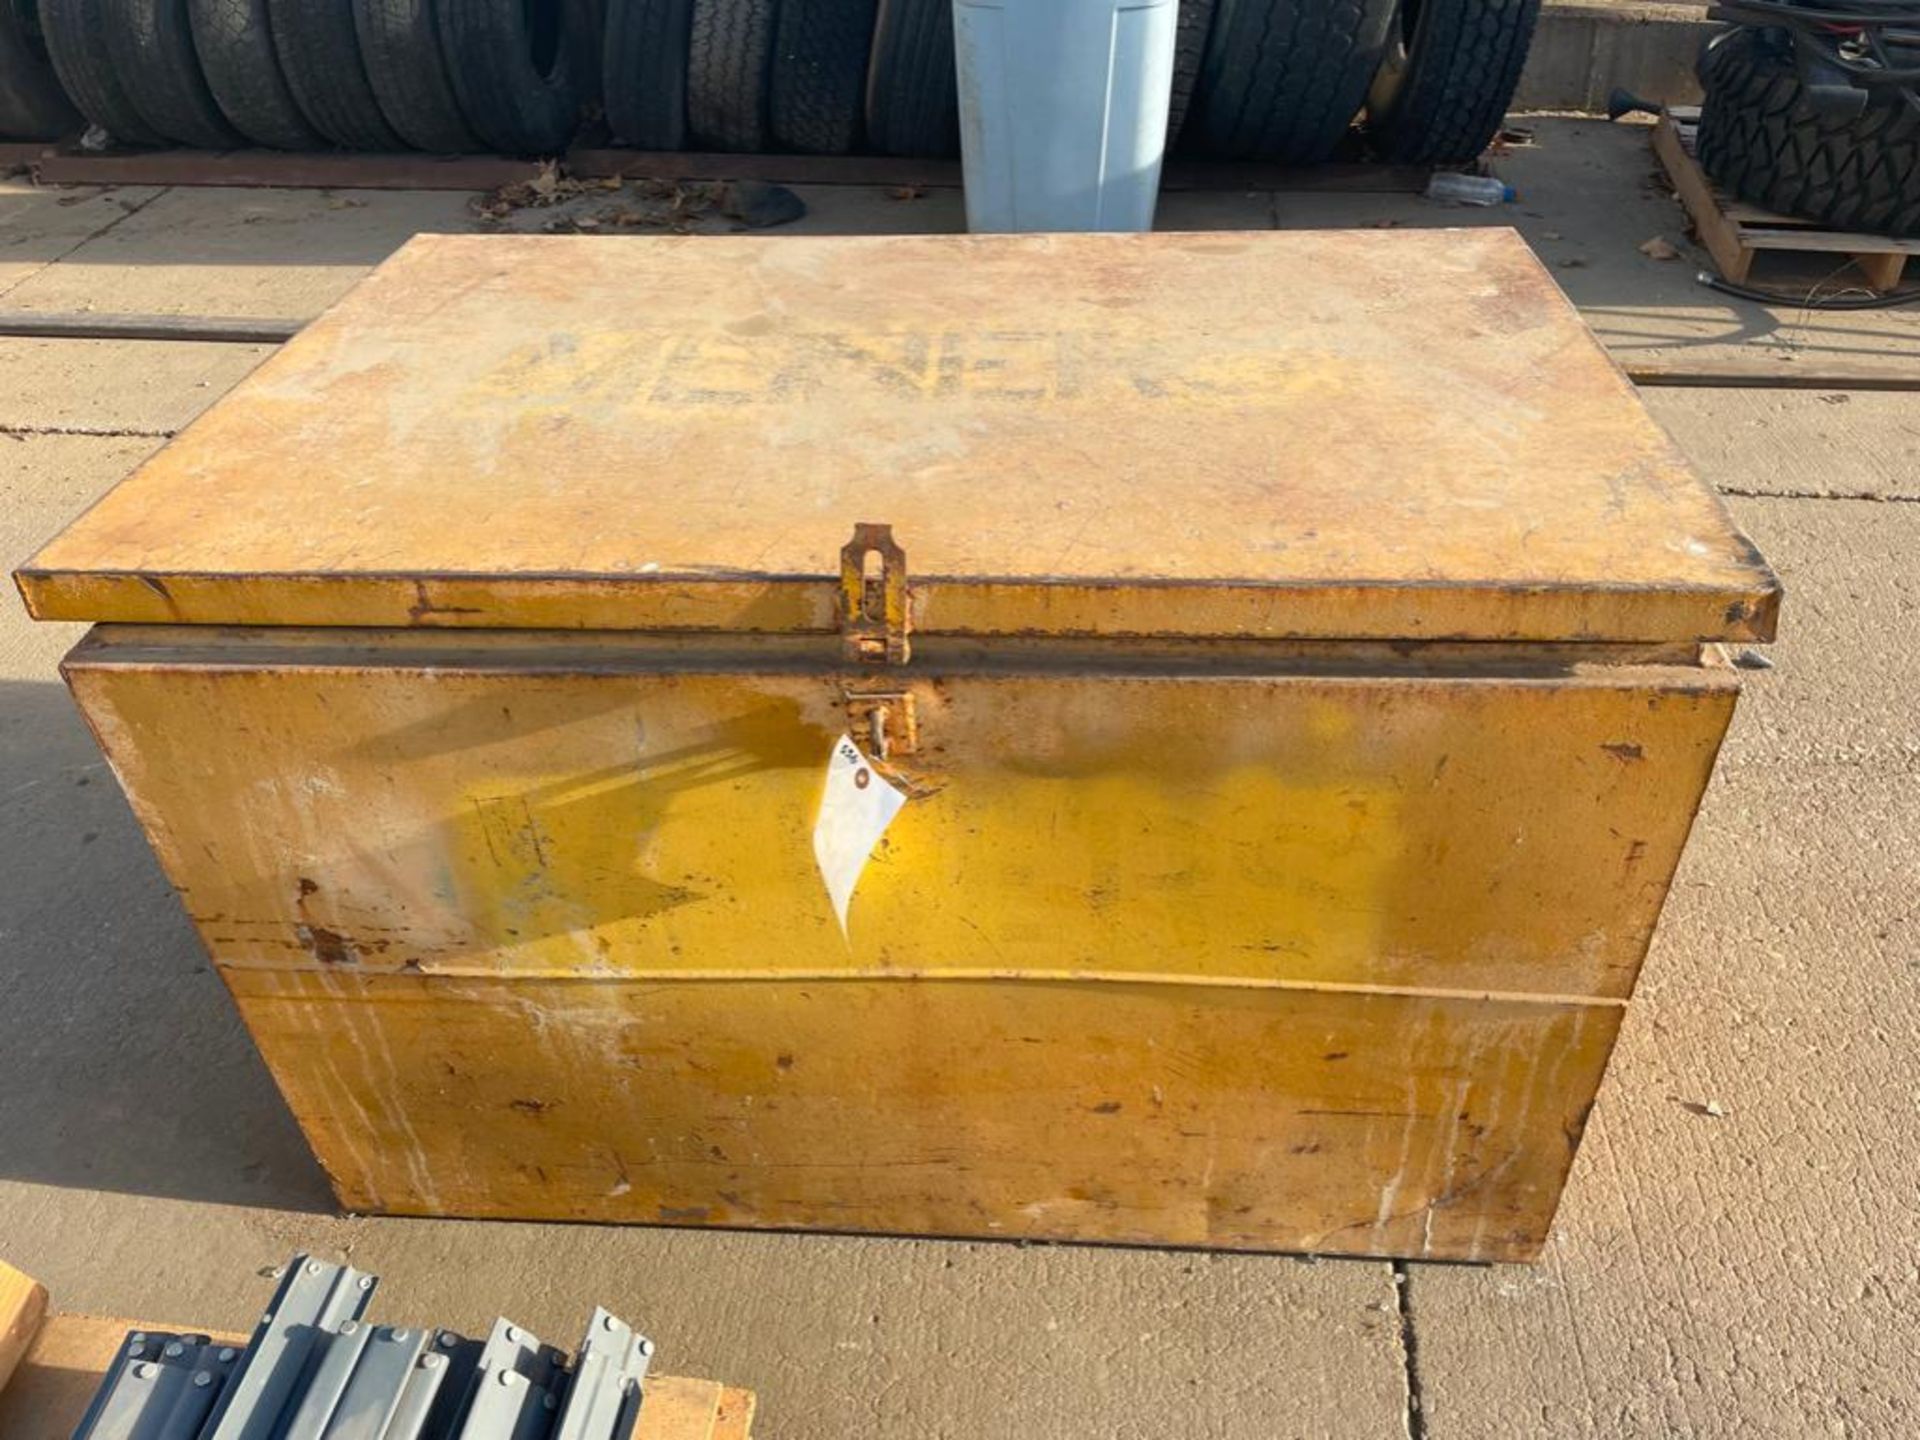 30" x 48" x 30" Metal Storage Box. Located in Hazelwood, MO - Image 3 of 5